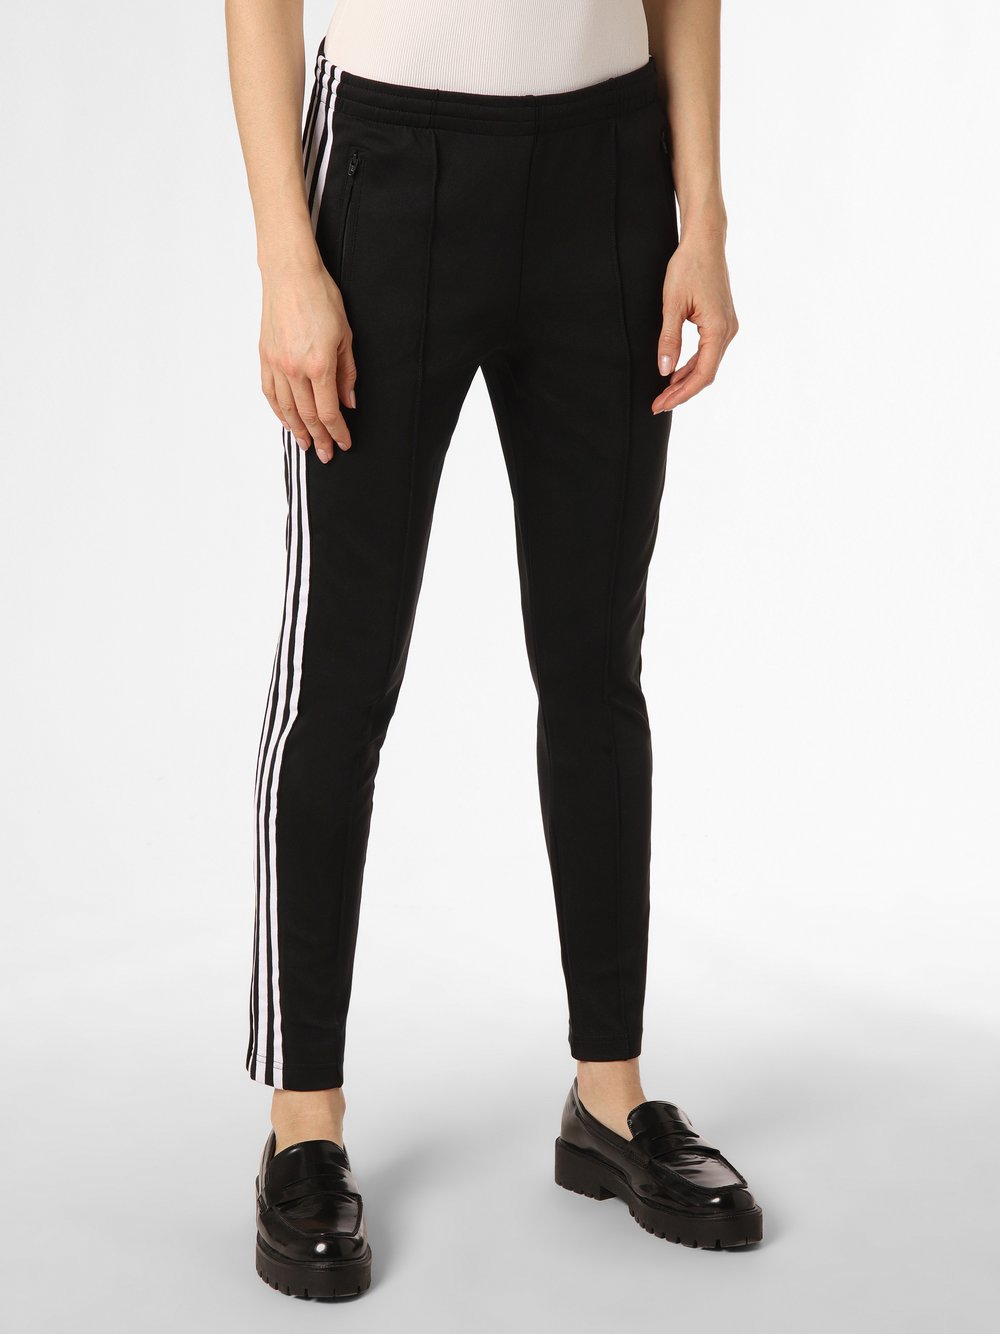 Adidas Originals - Spodnie damskie, czarny